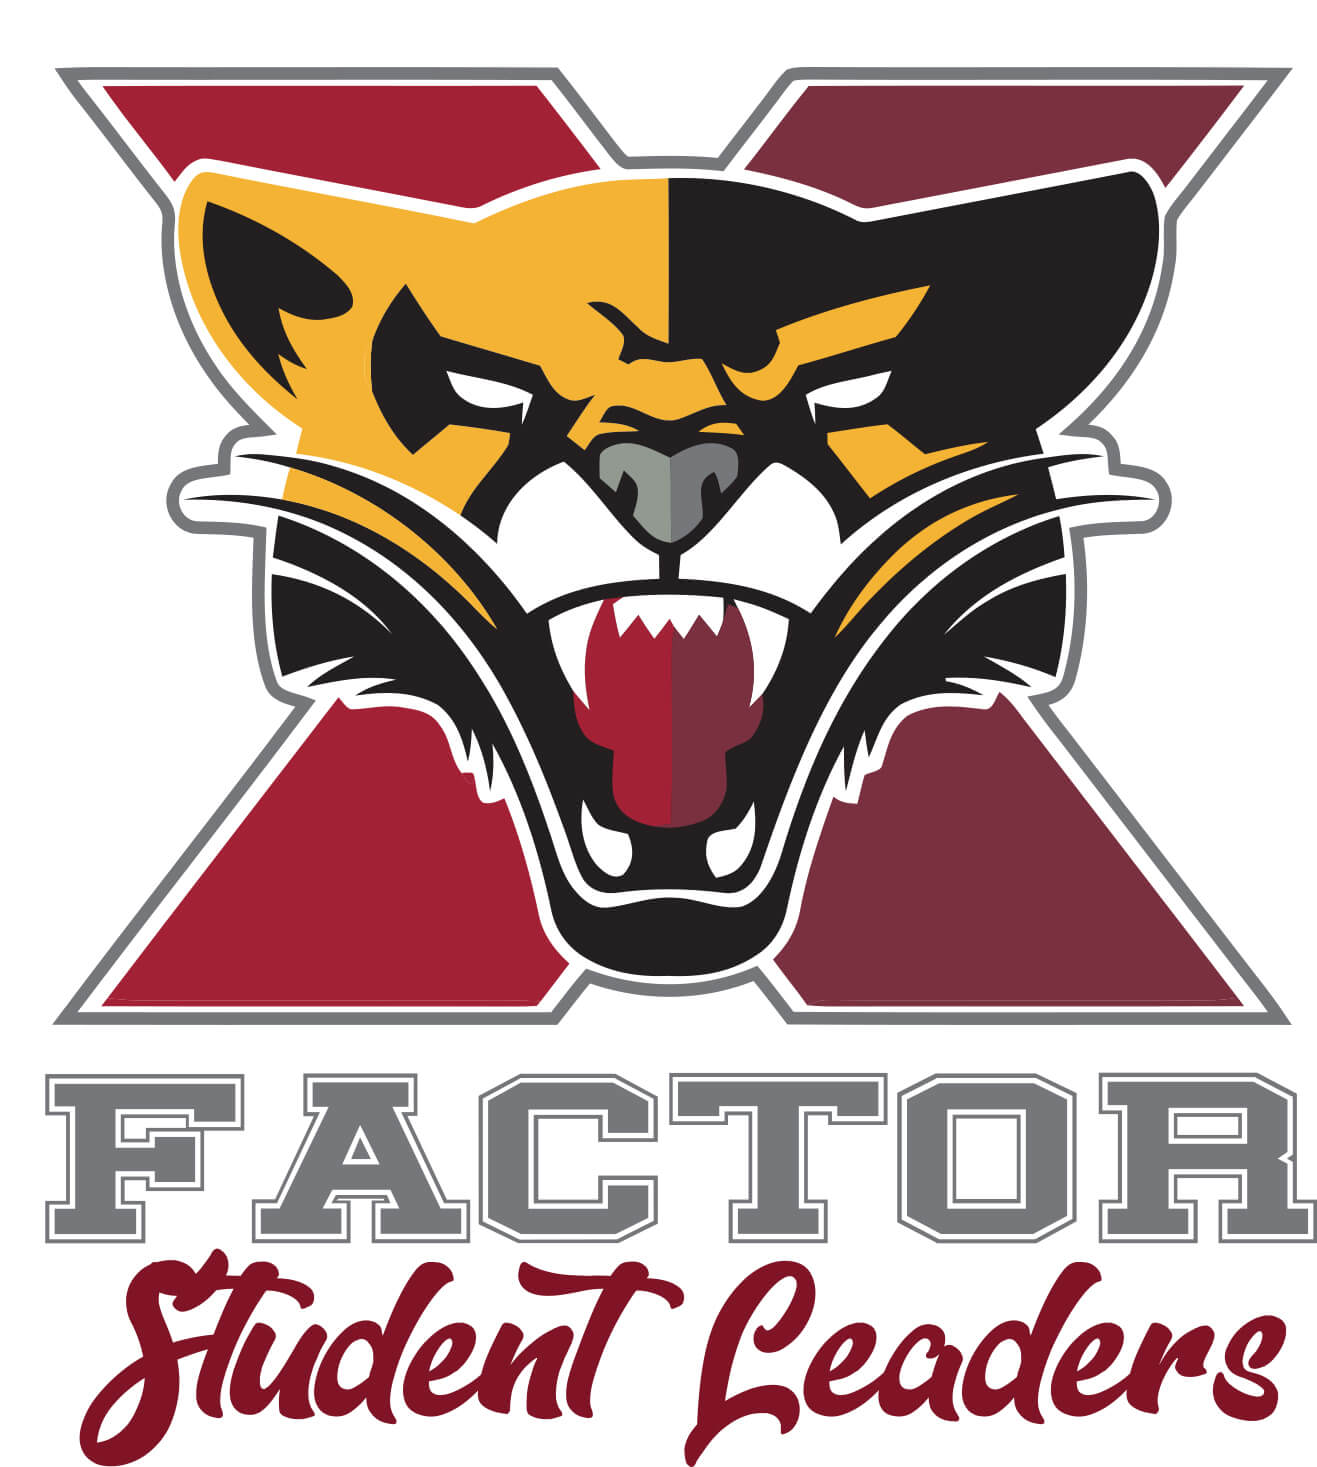 X-Factor Student Leaders Logo